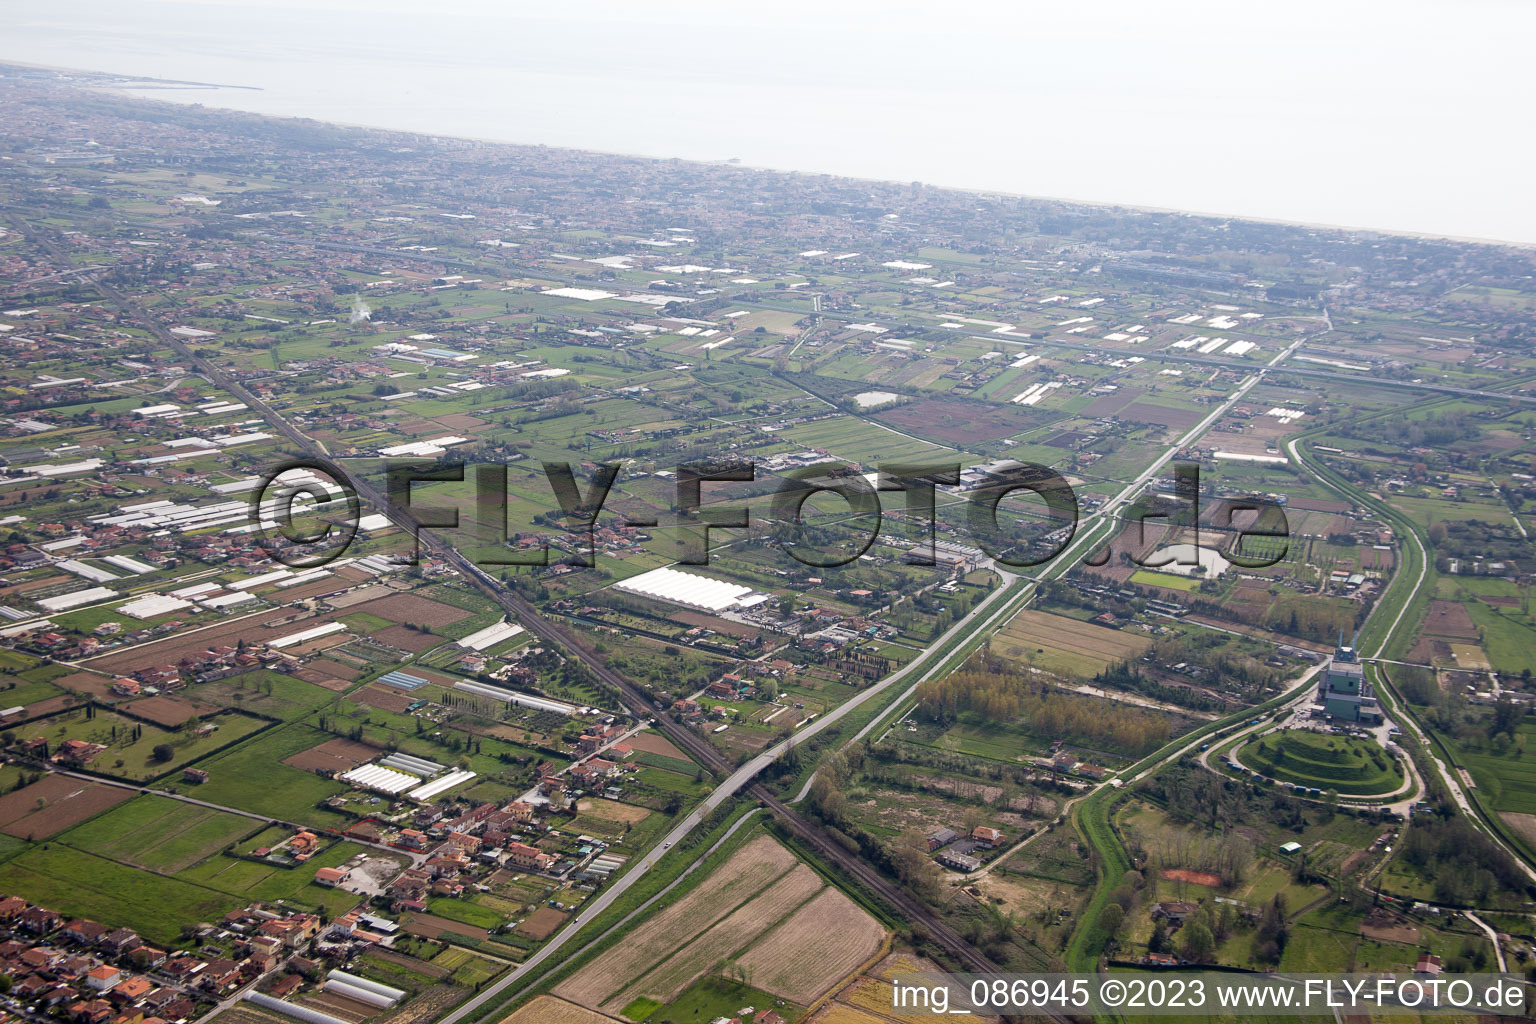 Luftaufnahme von Capezzano Pianore(I-Toskana) im Bundesland Toscana, Italien